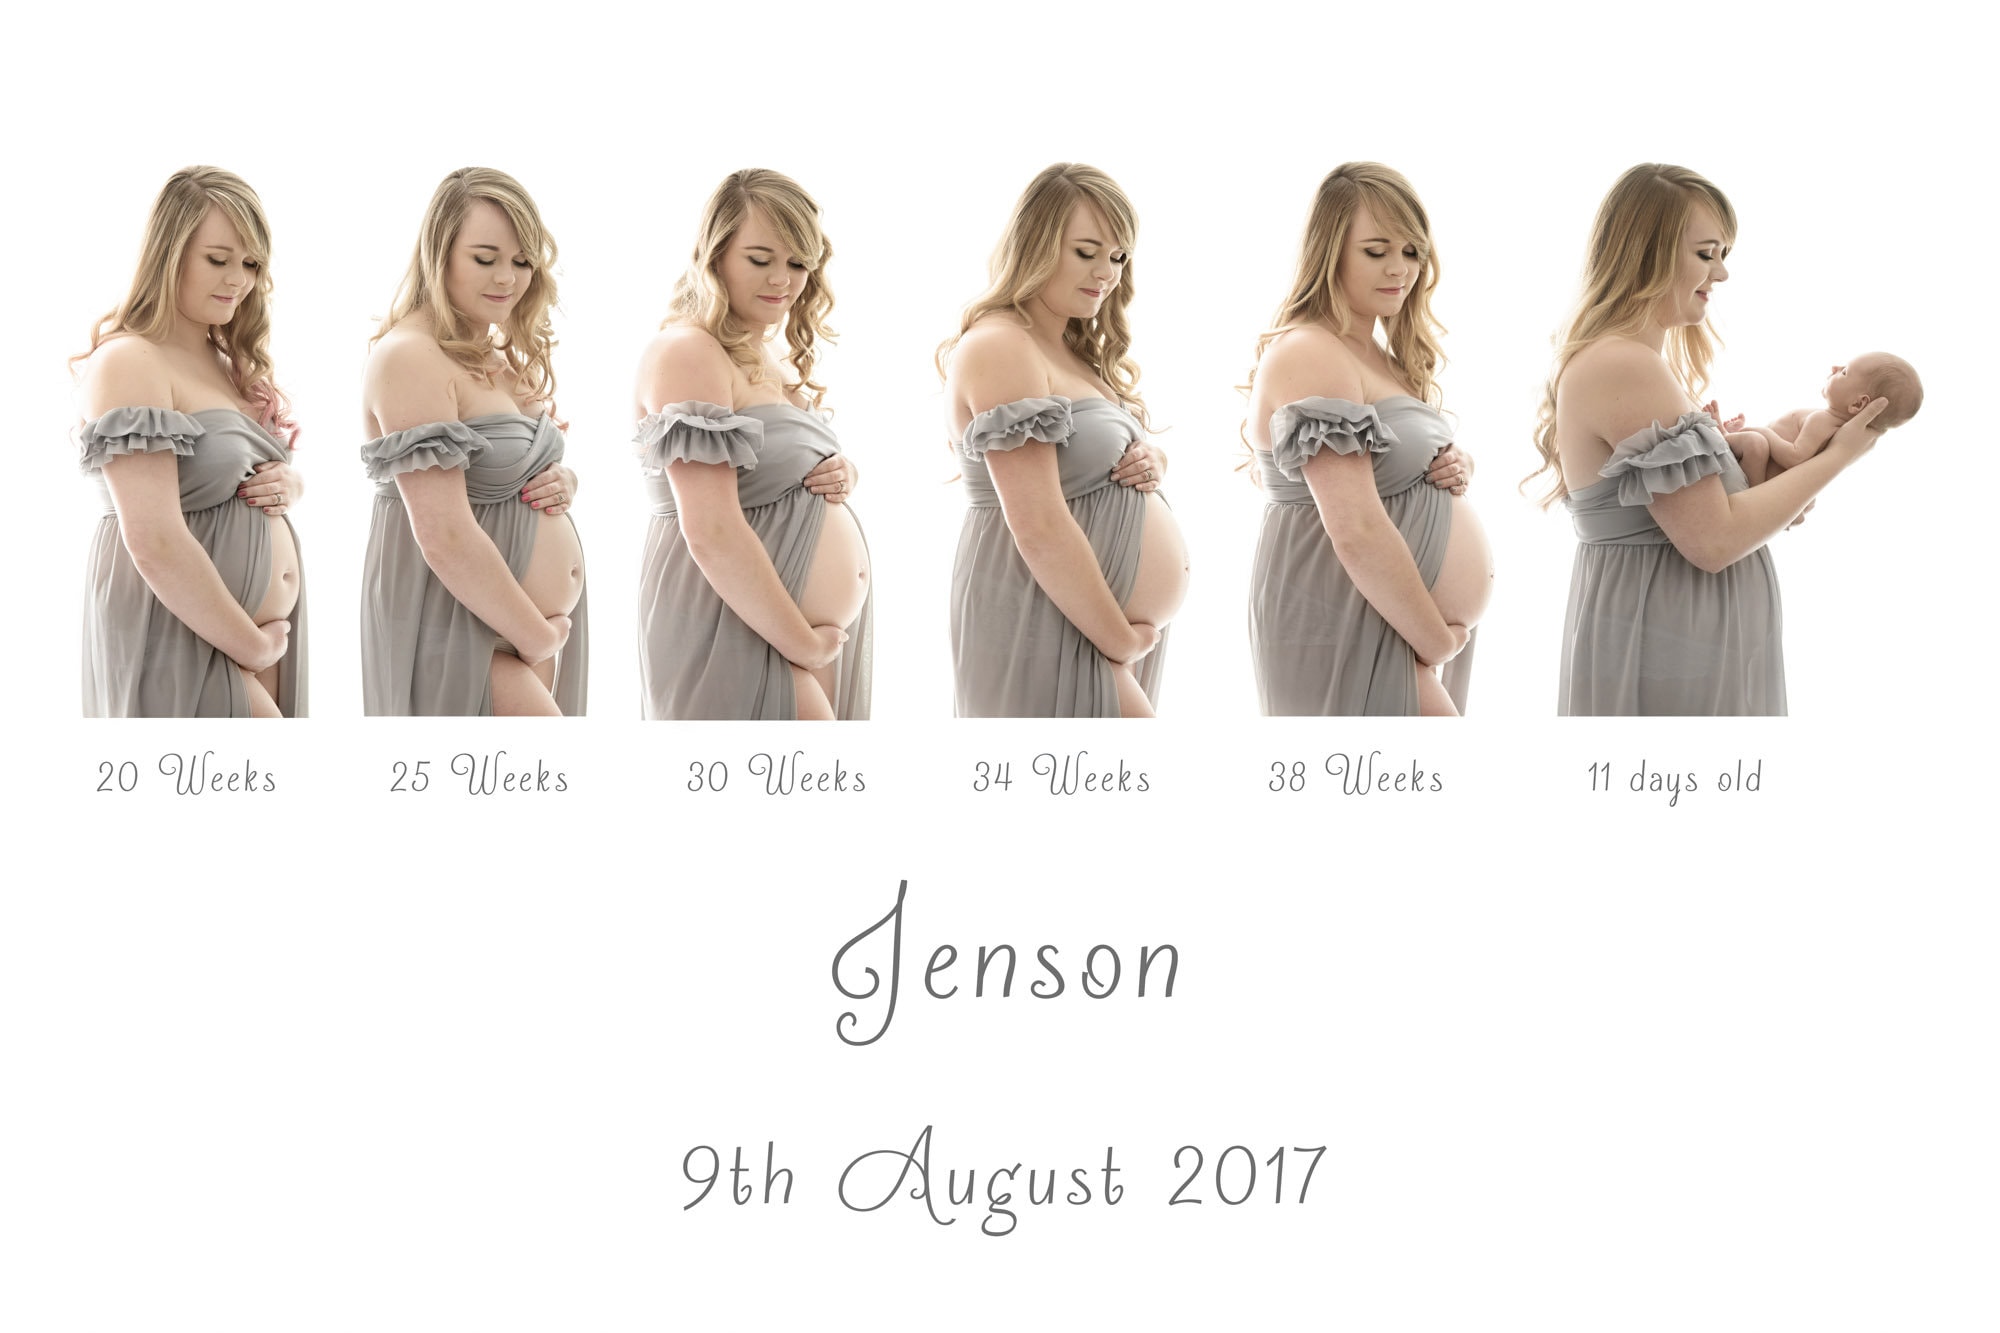 pregnancy timeline photo from 20 weeks to newborn baby